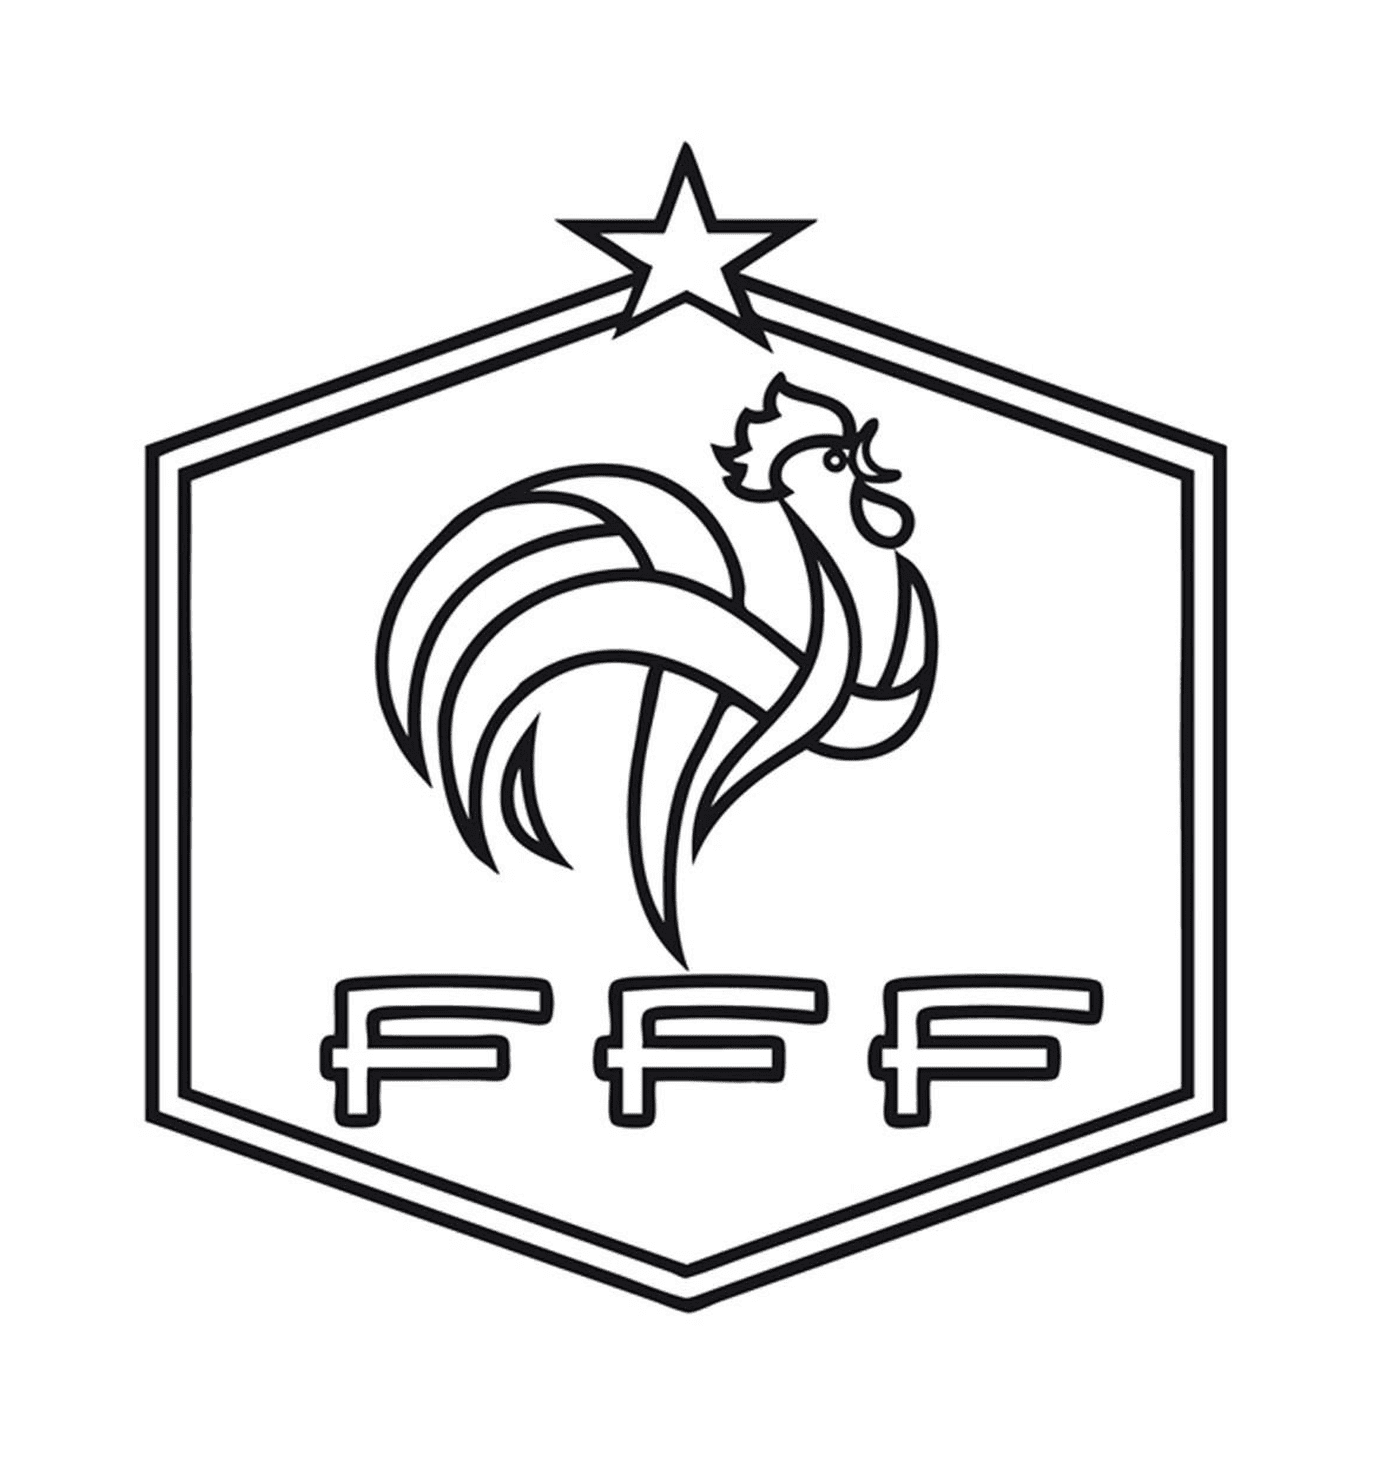  O galo icônico da FFF 